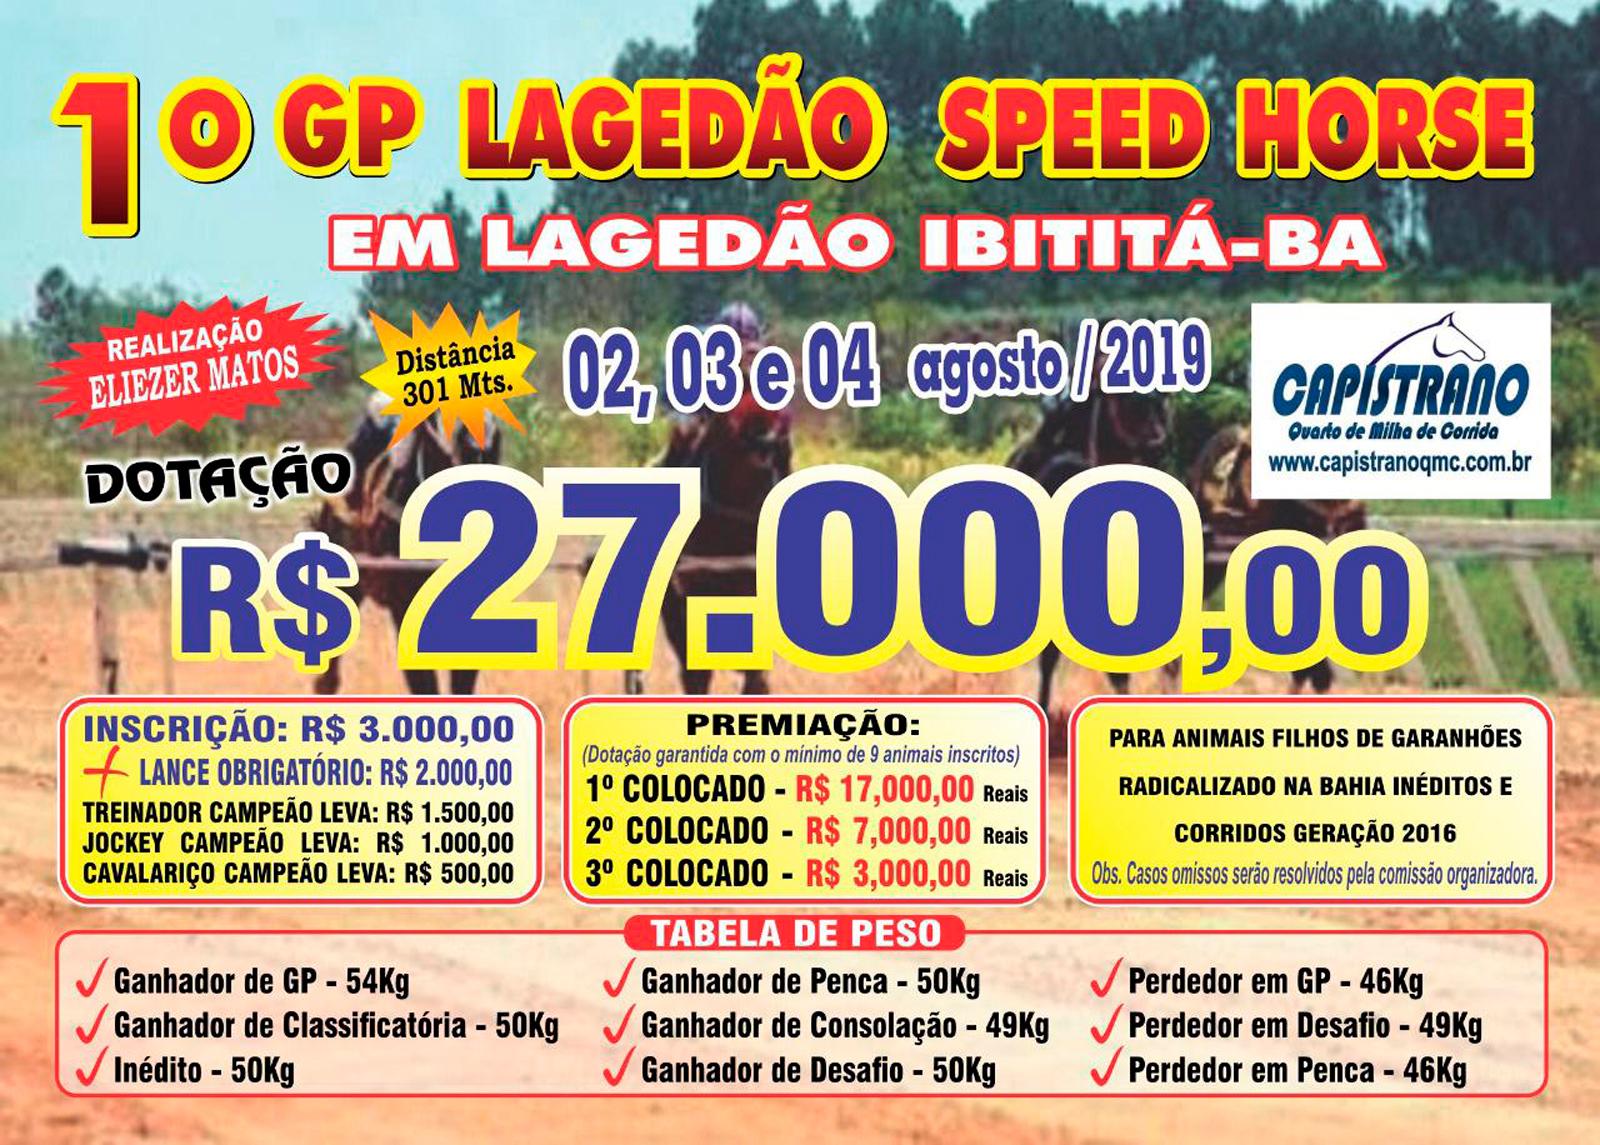 1º GP LAGEDÃO SPEED HORSE - LAGEDÃO IBITITÁ - BA